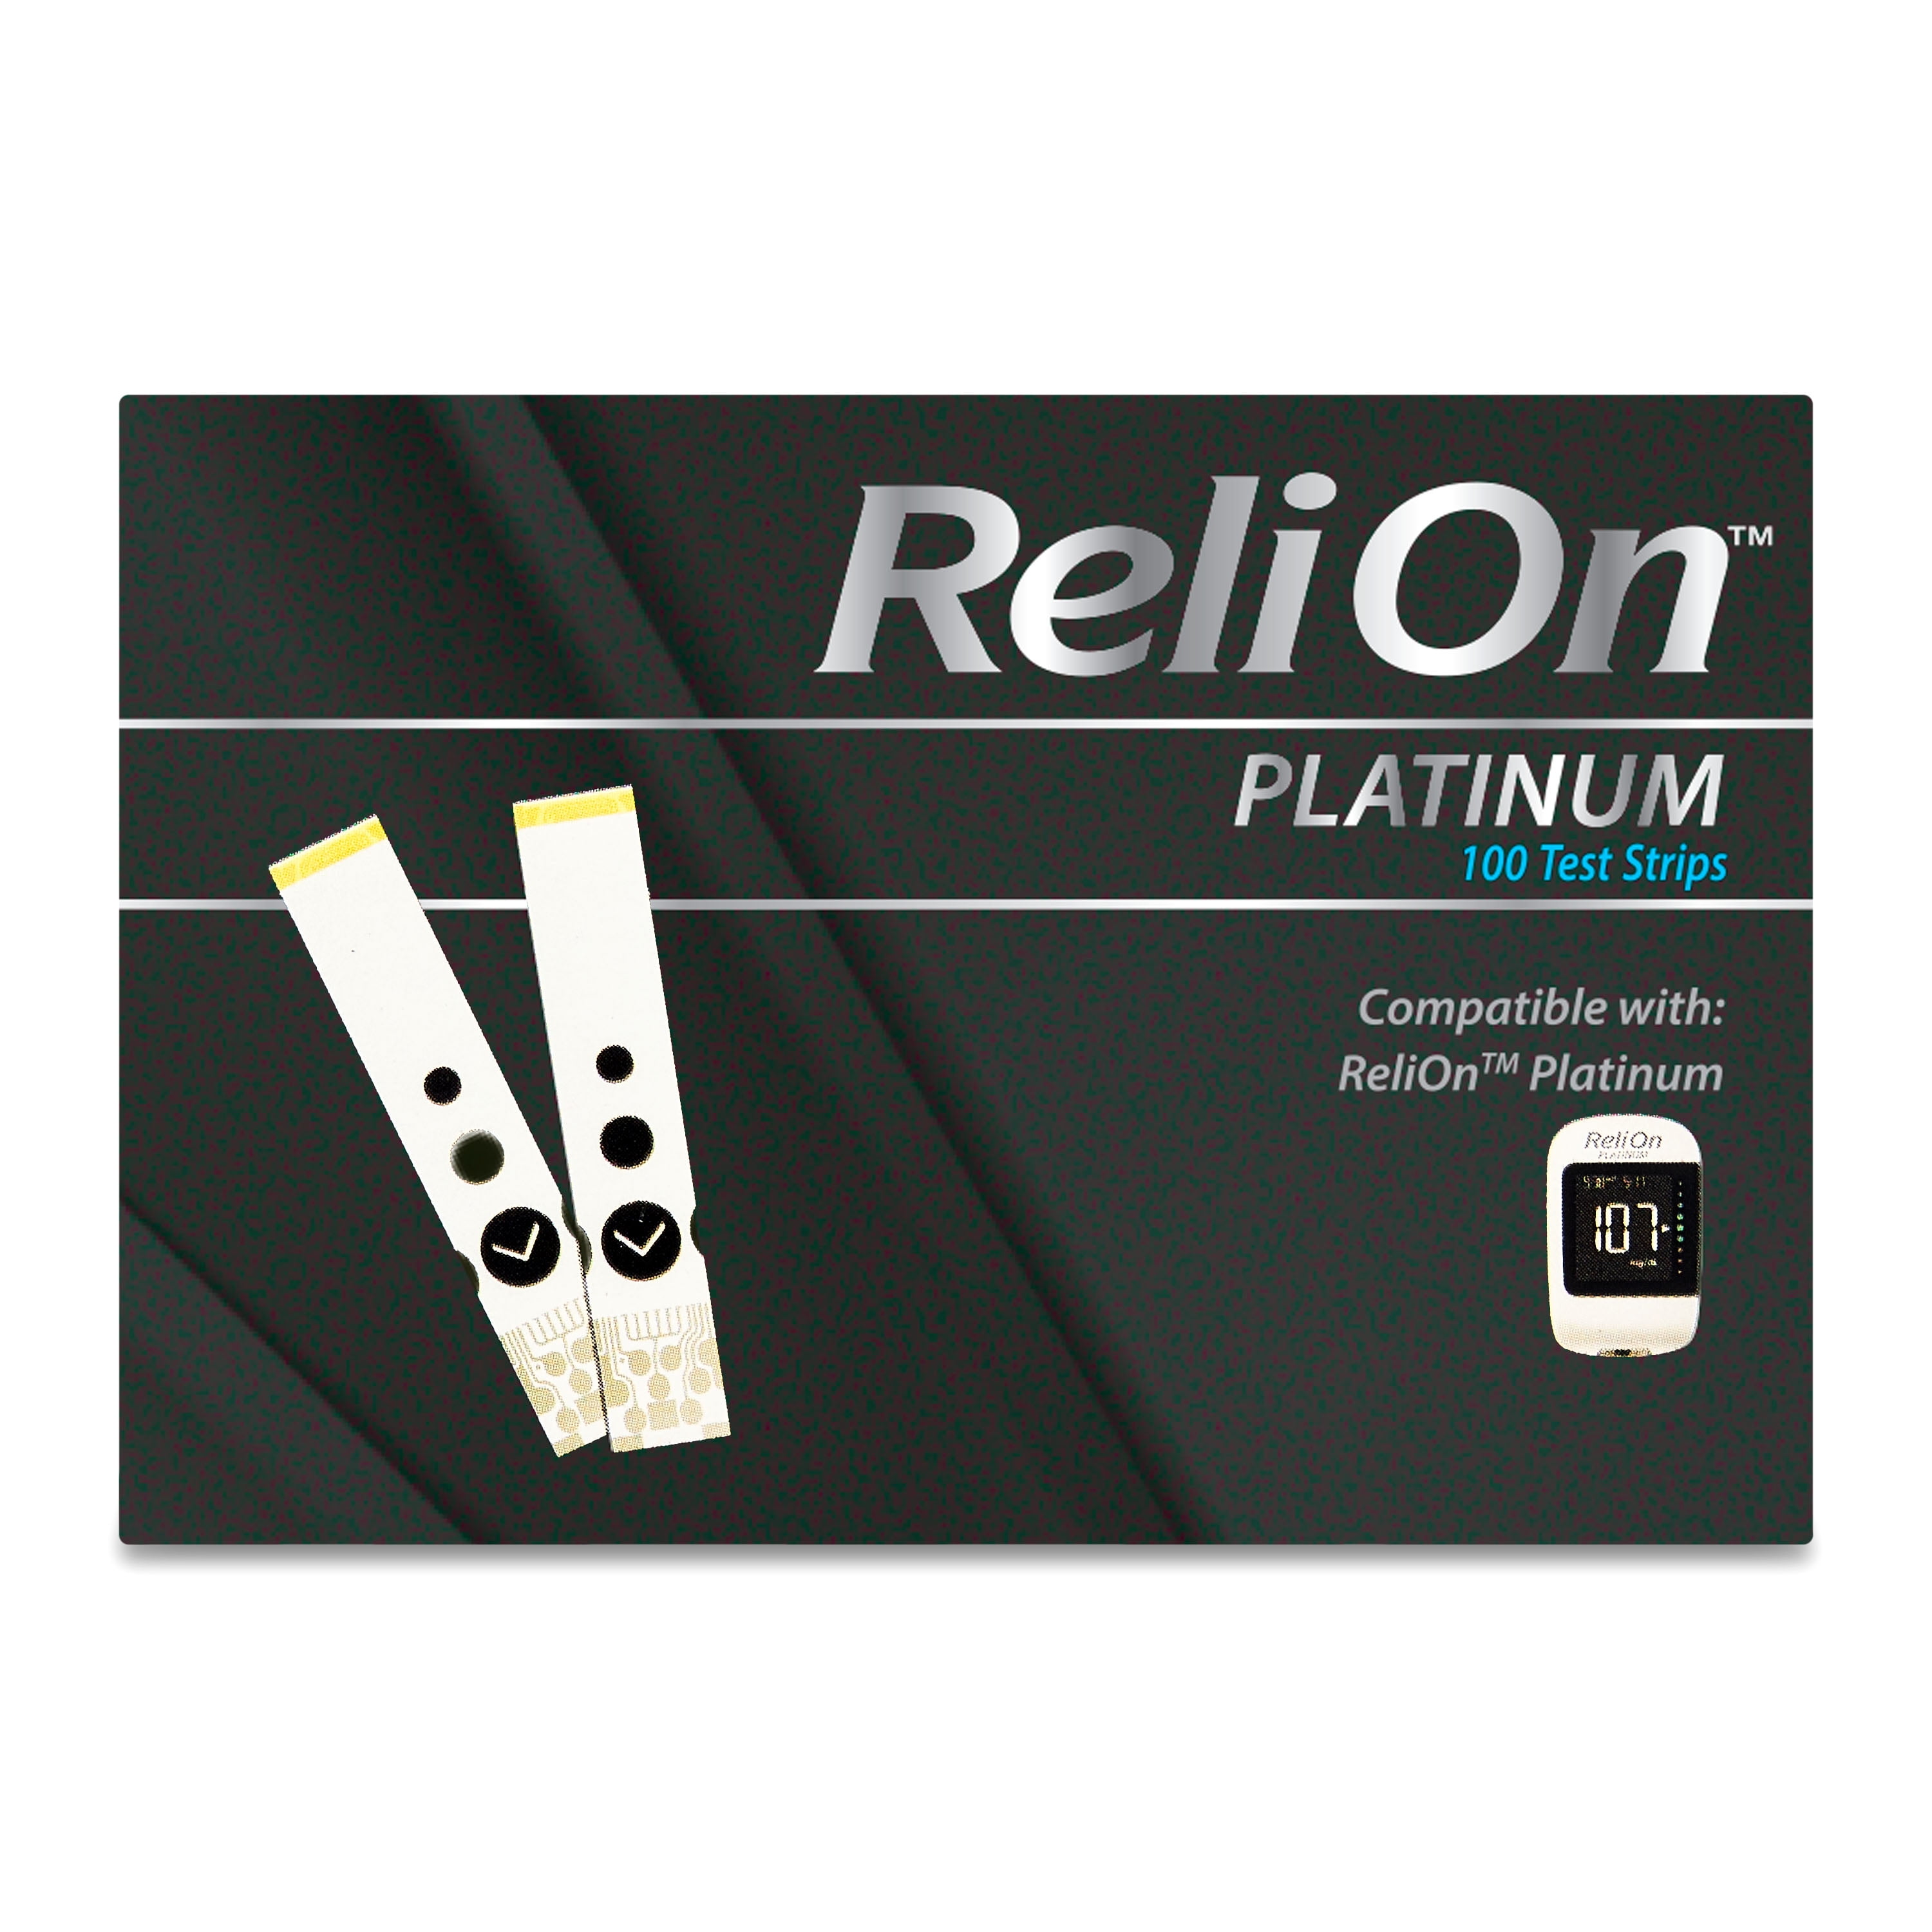 ReliOn Platinum Blood Glucose Test Strips, 100 Count